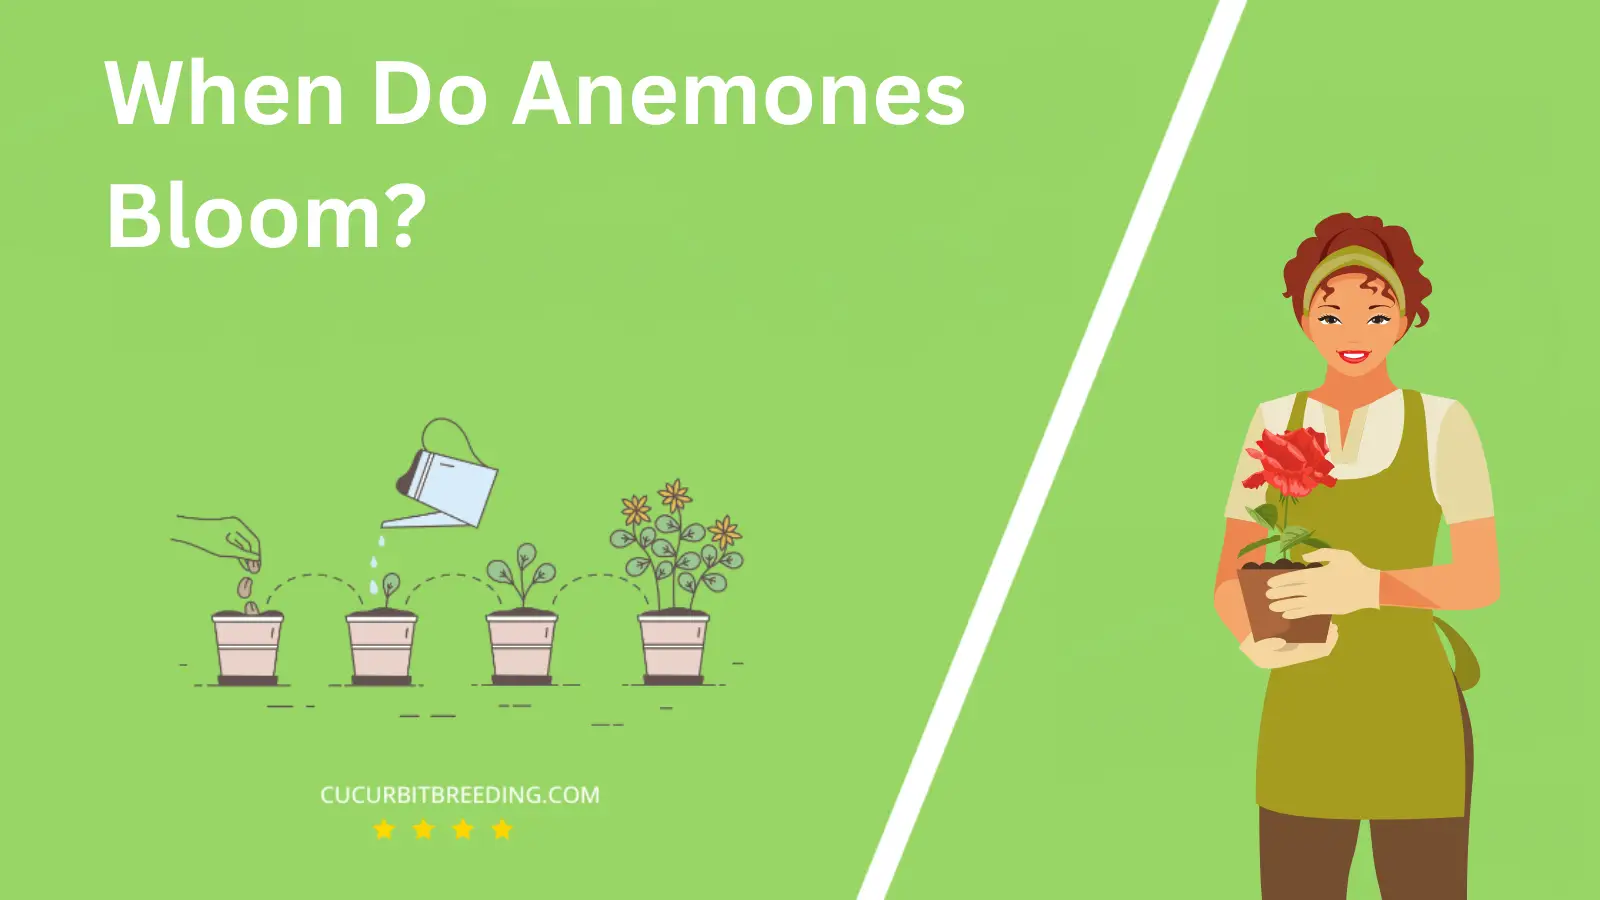 When Do Anemones Bloom?